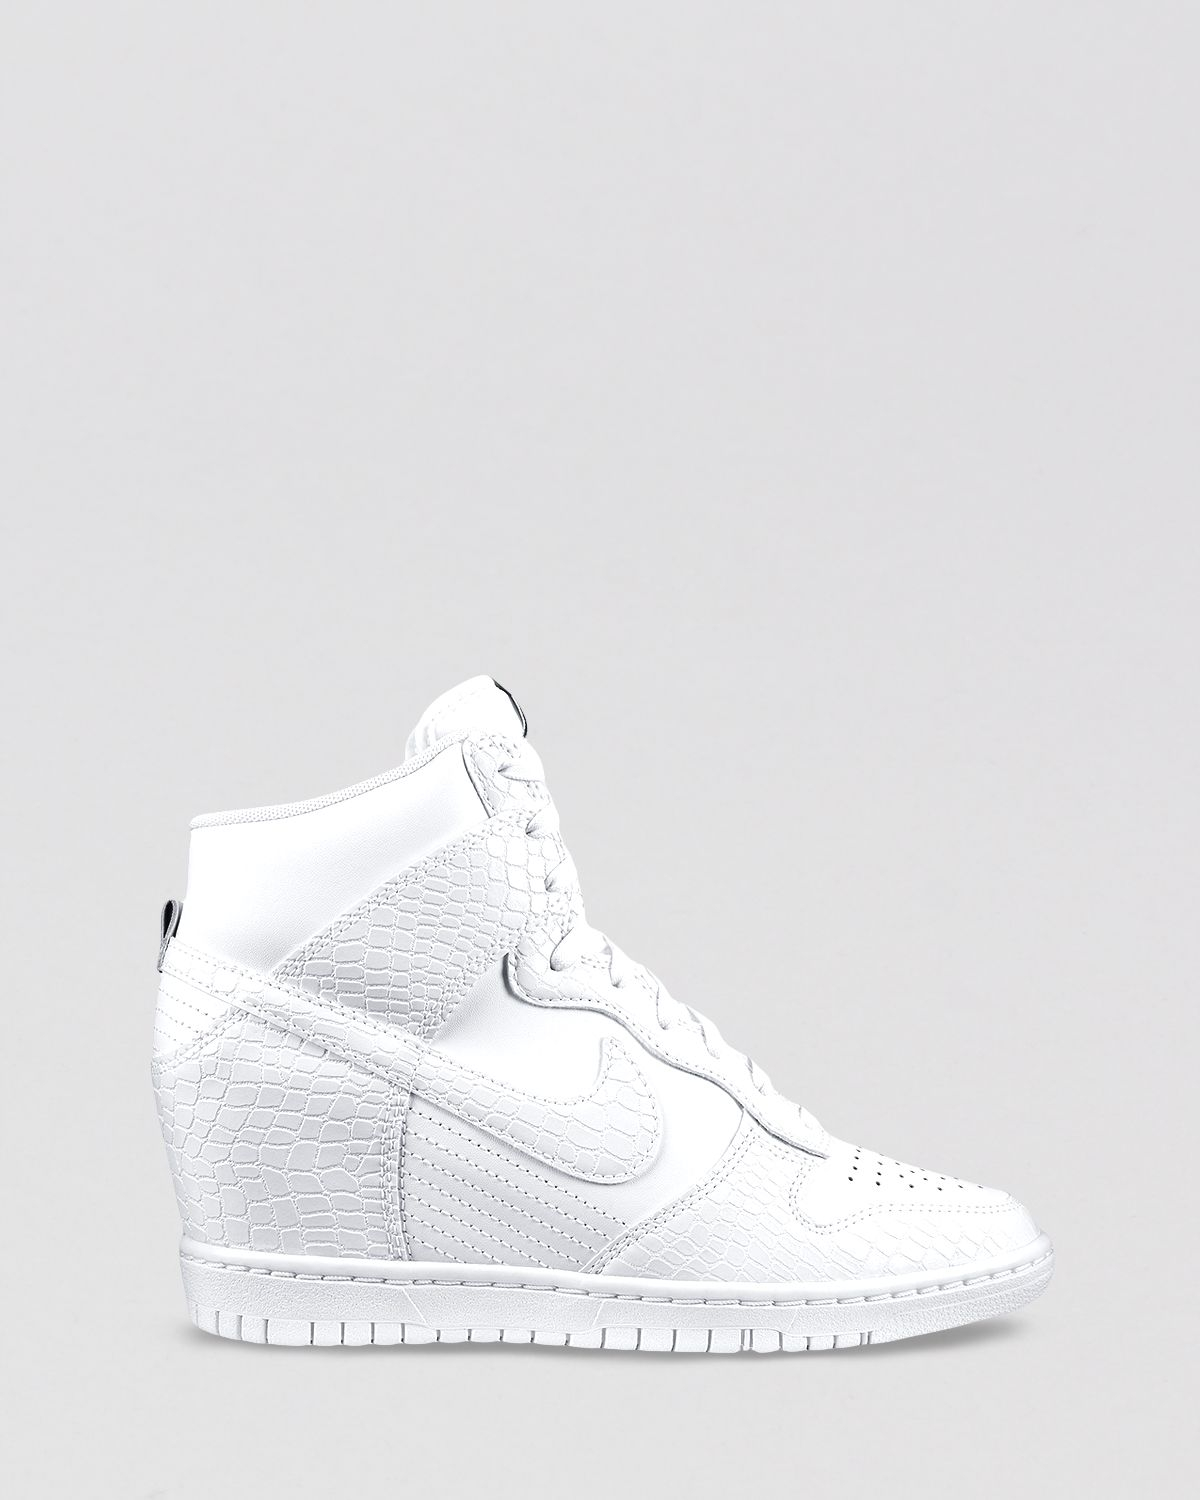 Nike High Top Wedge Sneakers Womens Dunk Sky Hi in White (White/White ...